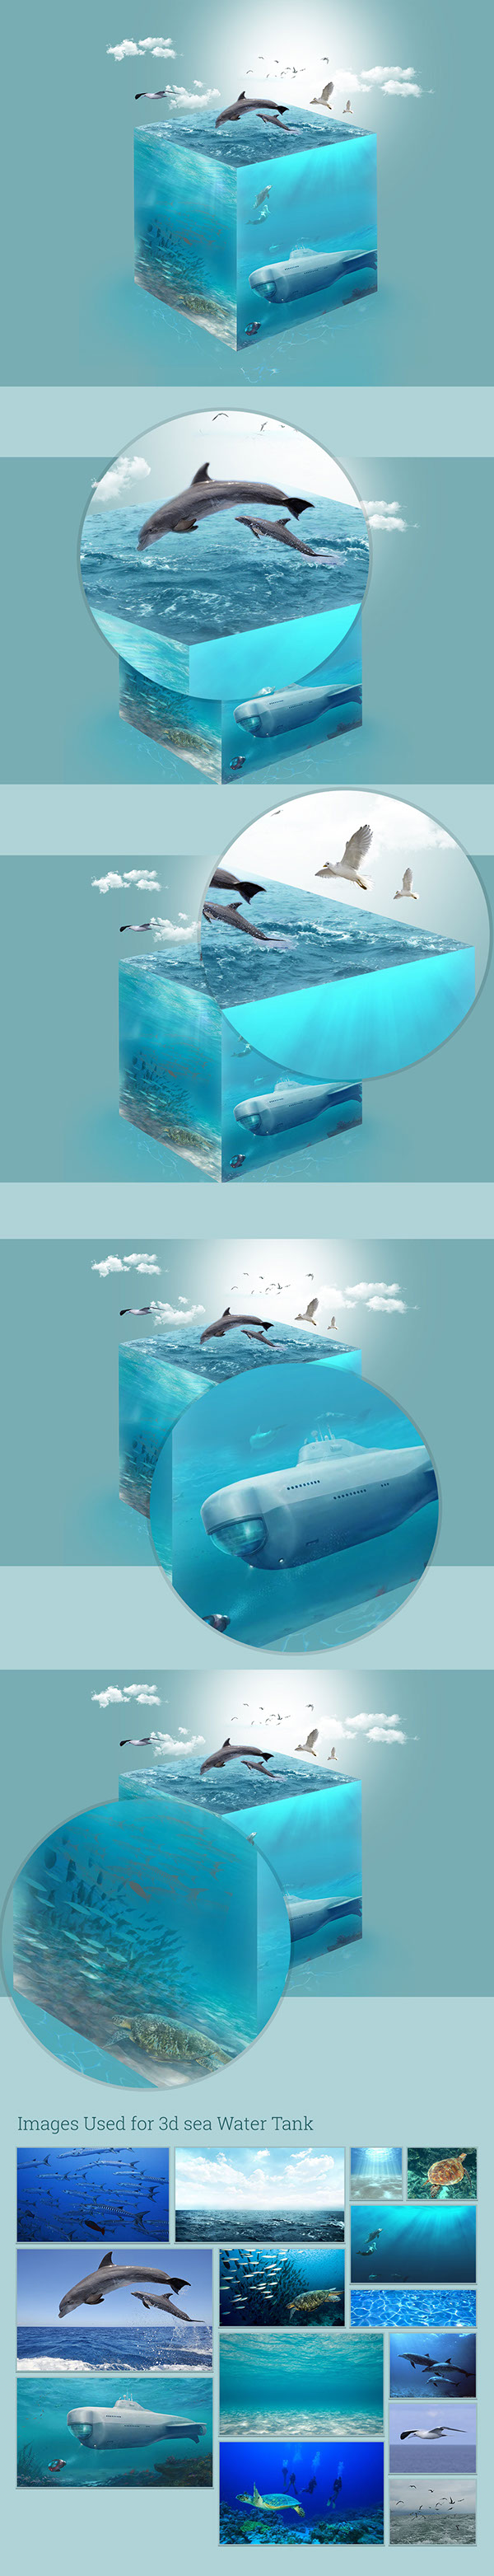 3d sea water tank